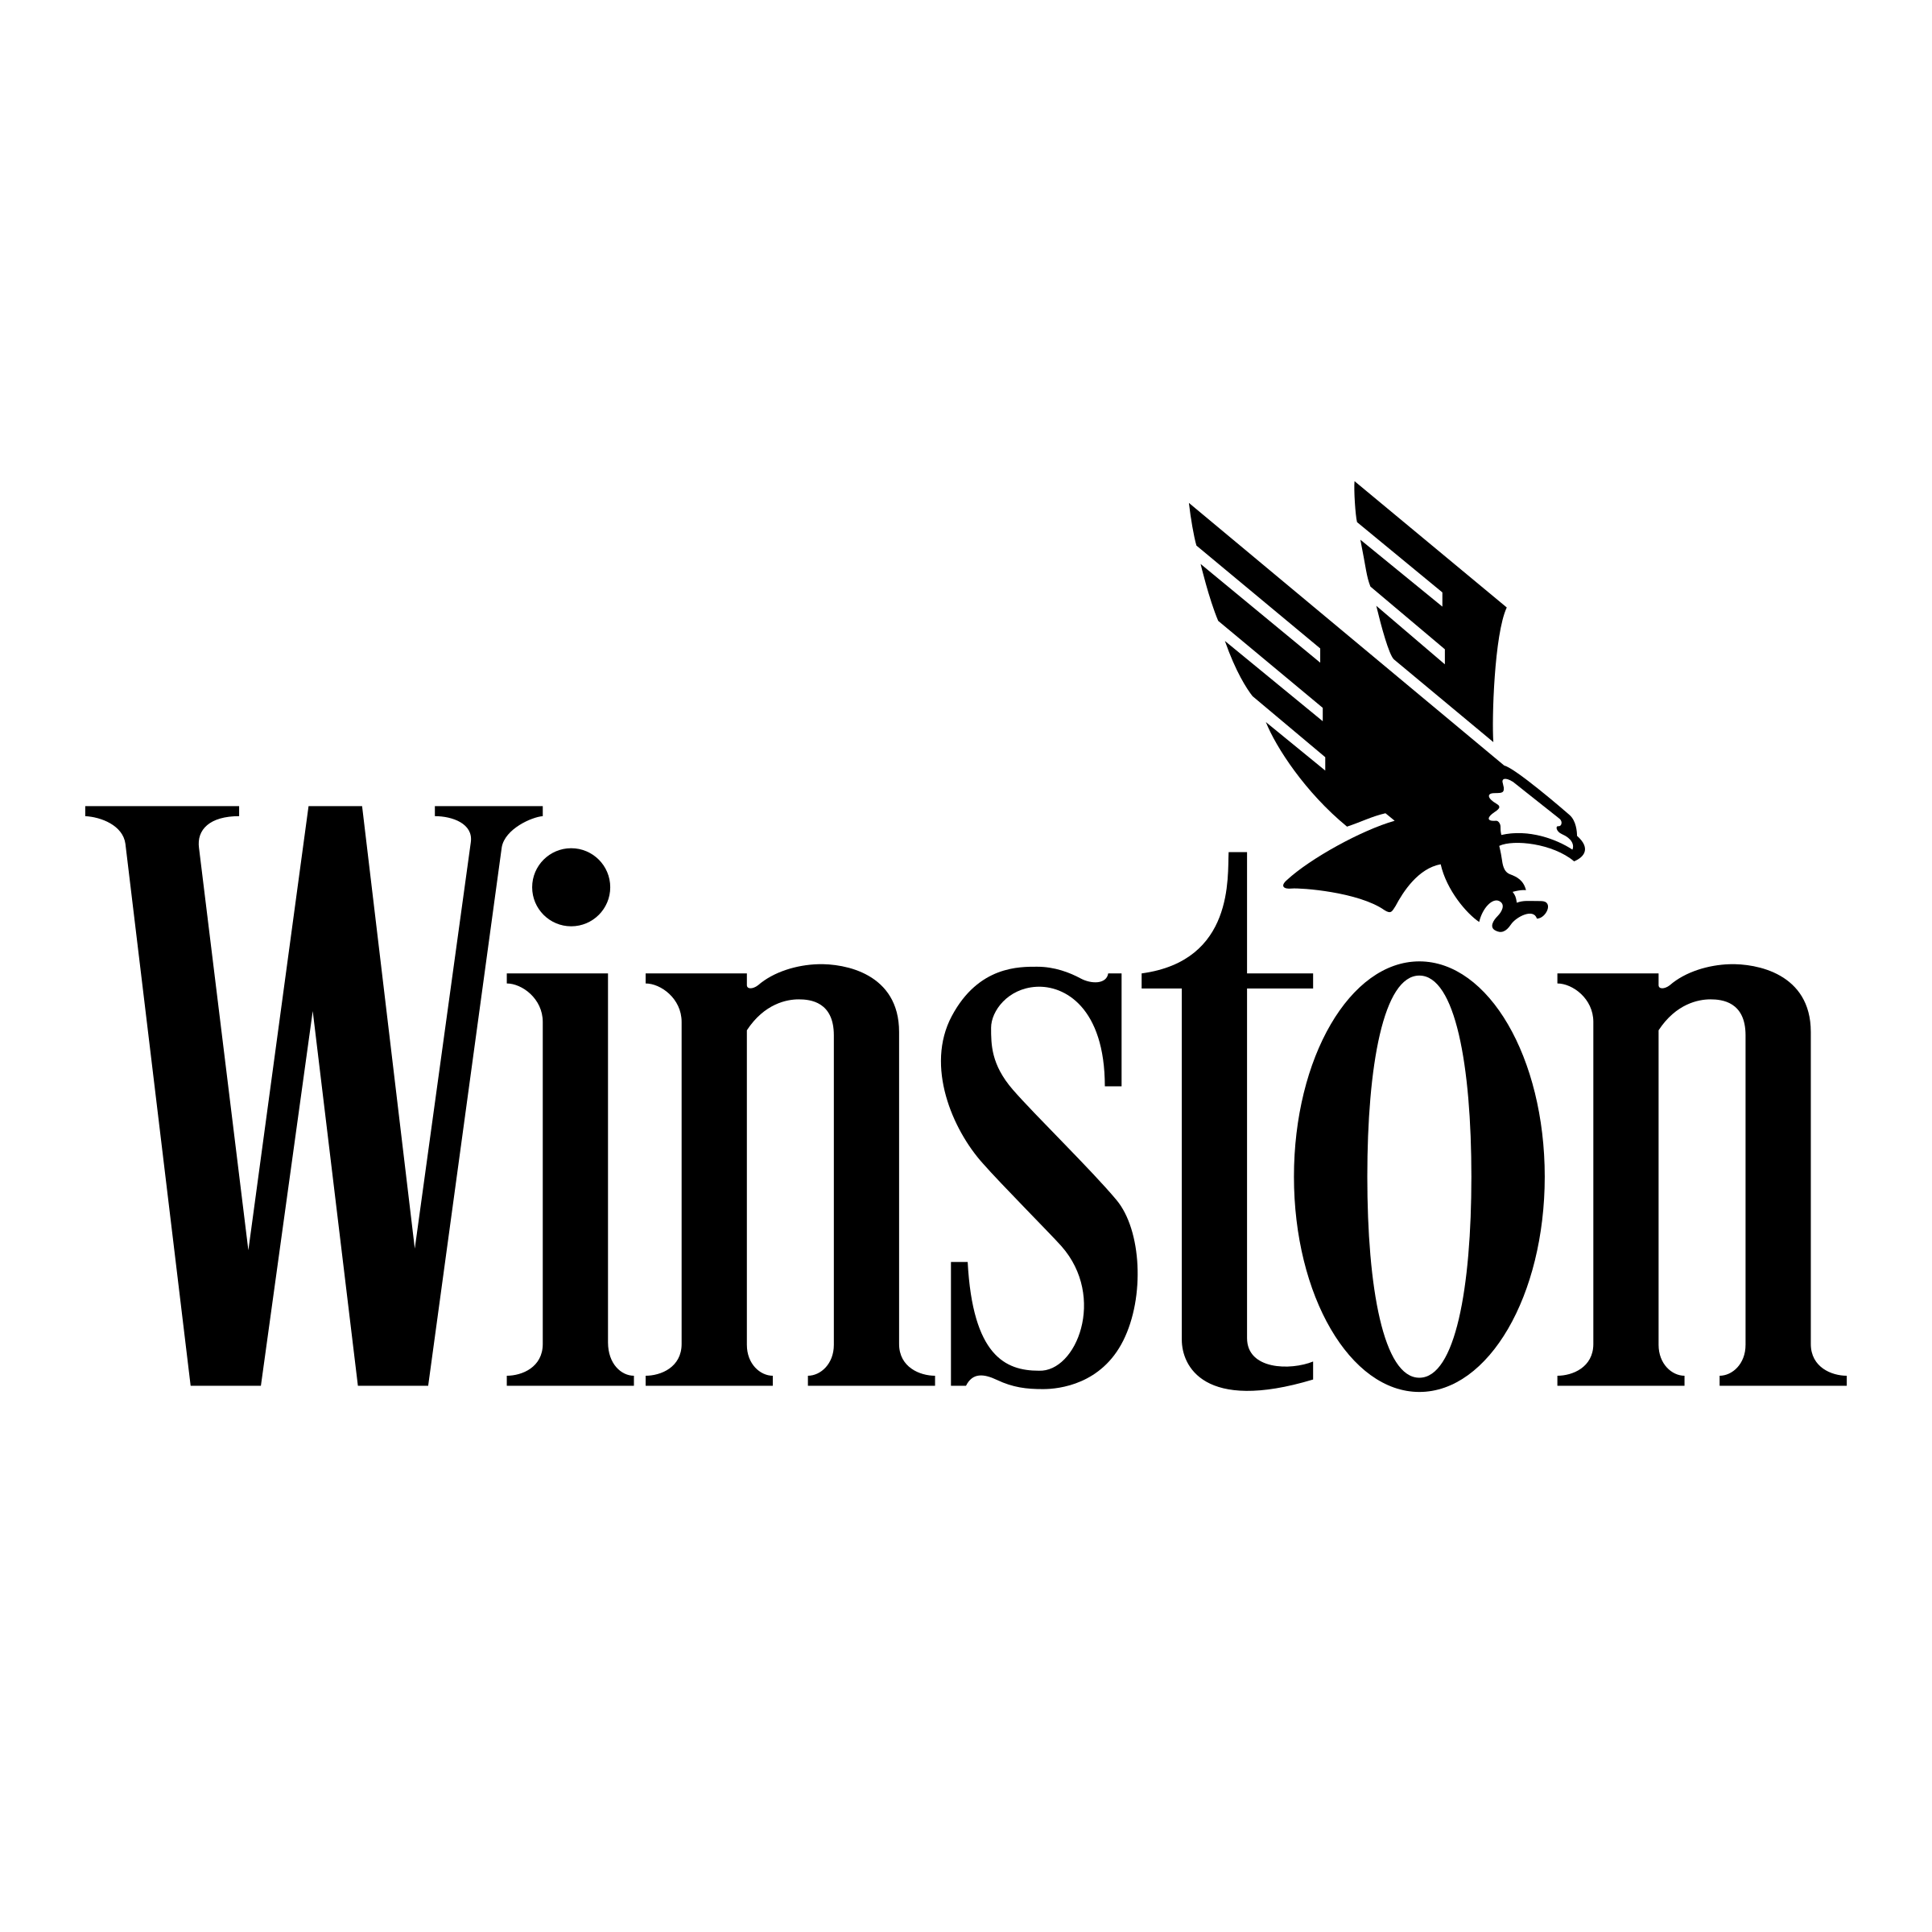 Winston Logo - Winston Logo PNG Transparent & SVG Vector - Freebie Supply